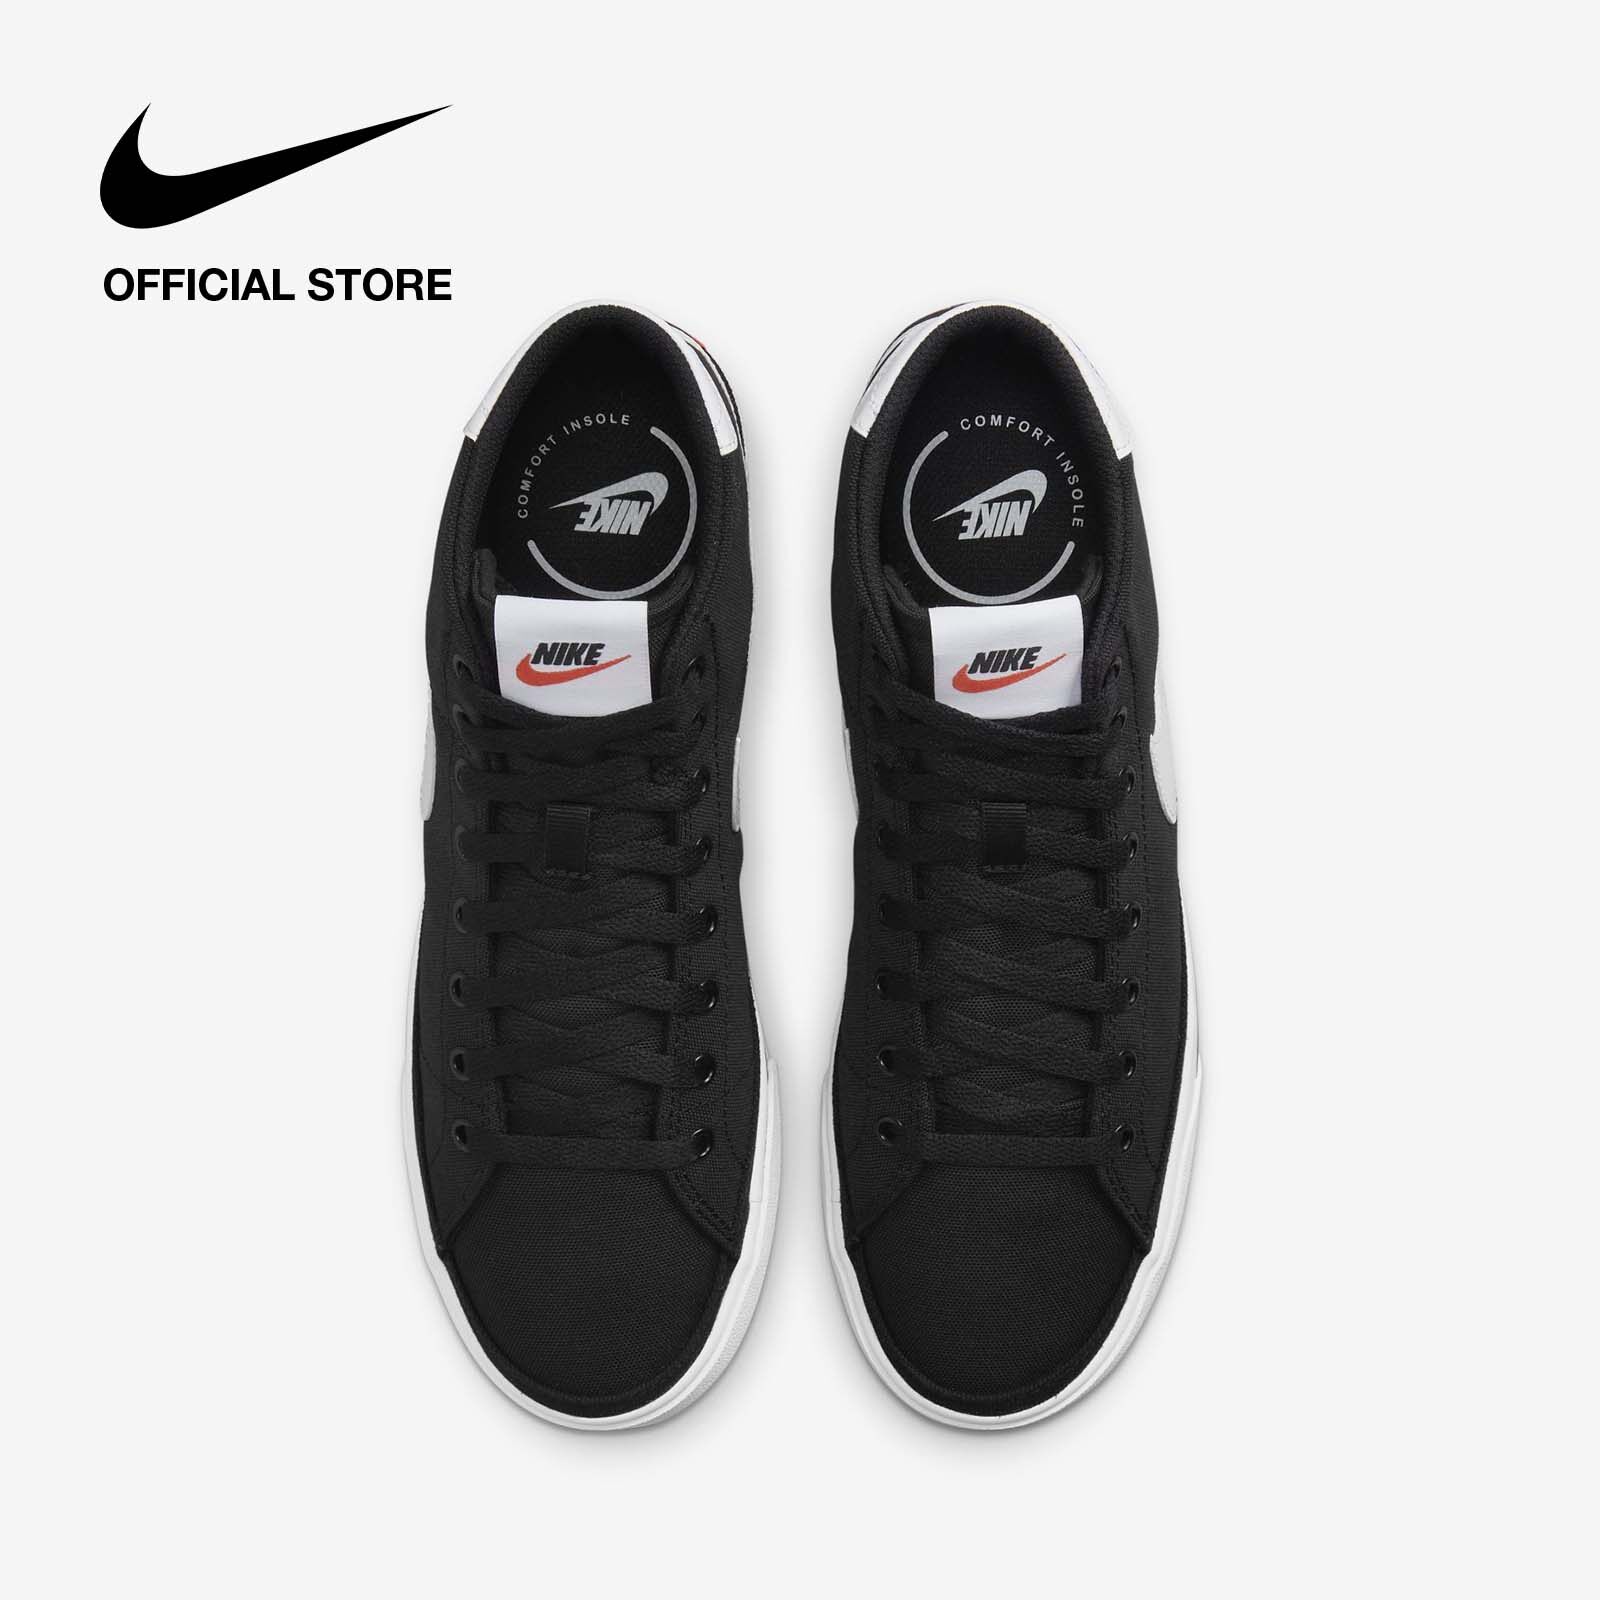 Nike Men's Court Legacy Canvas Mid Shoes - Black รองเท้าผู้ชาย Nike Court Legacy Canvas Mid - สีดำ